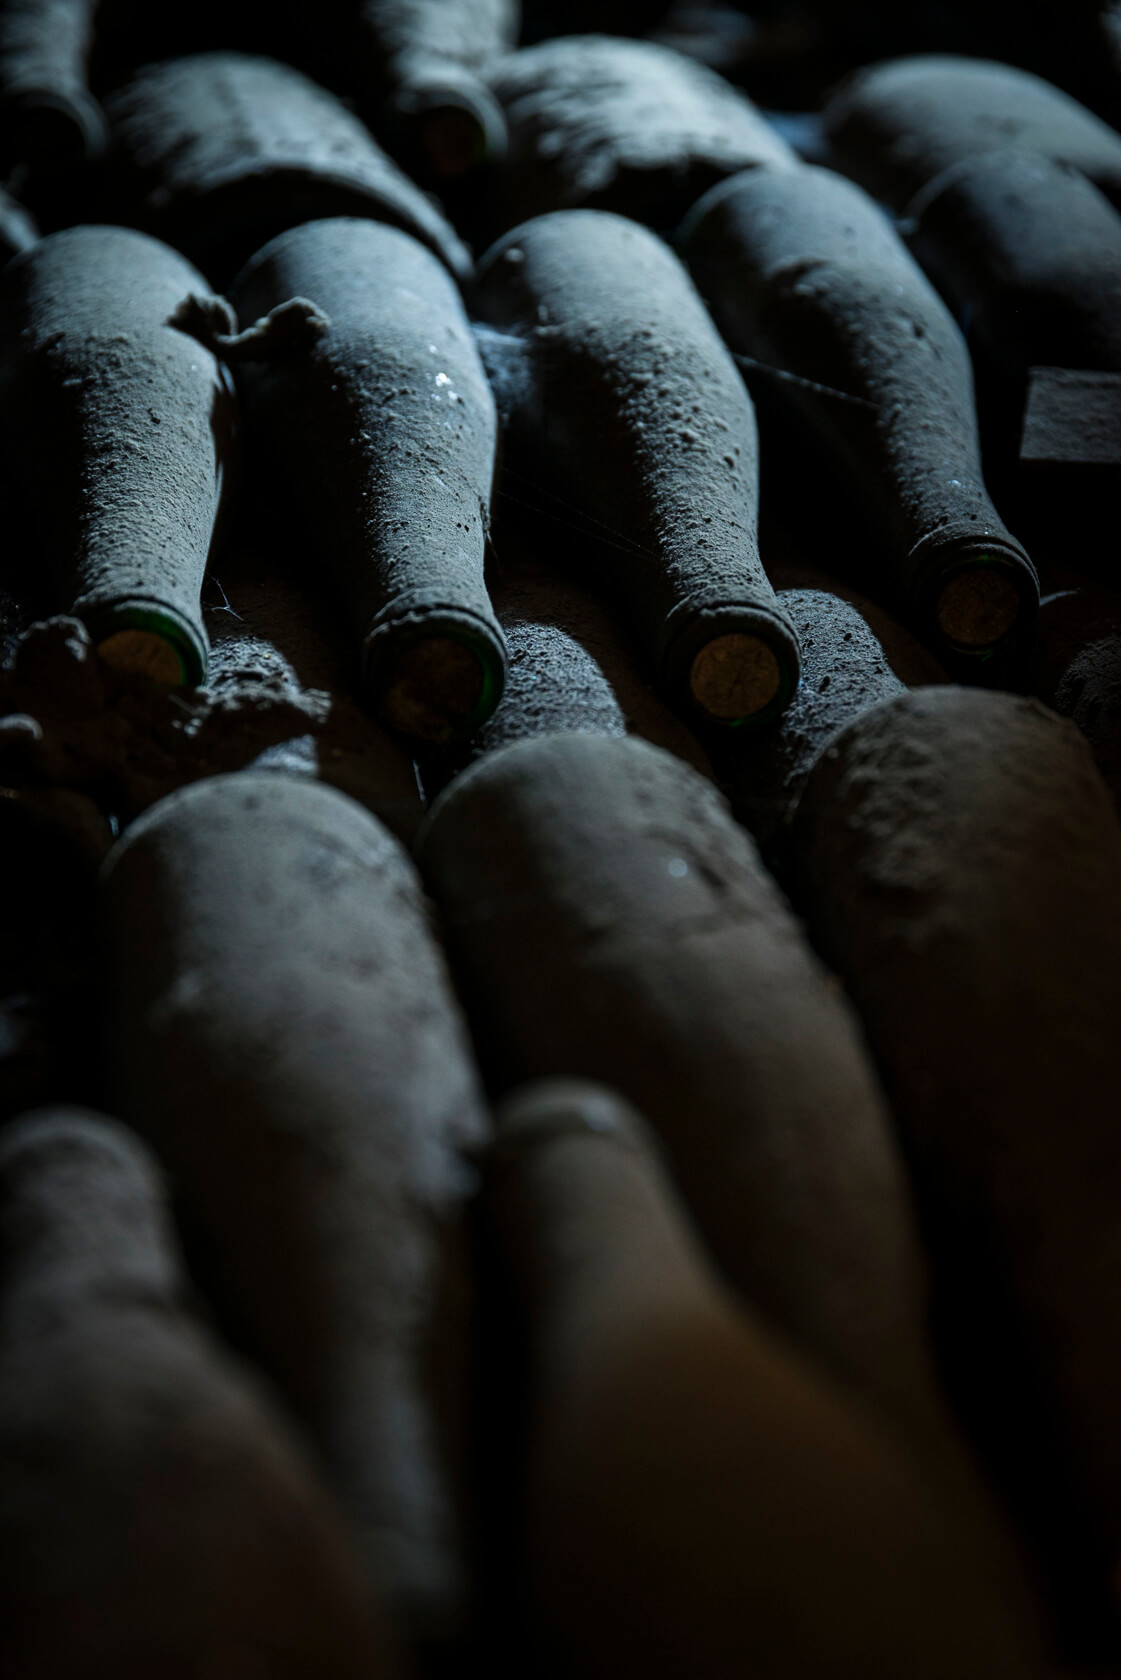 Wine cellar treasury wine bottles